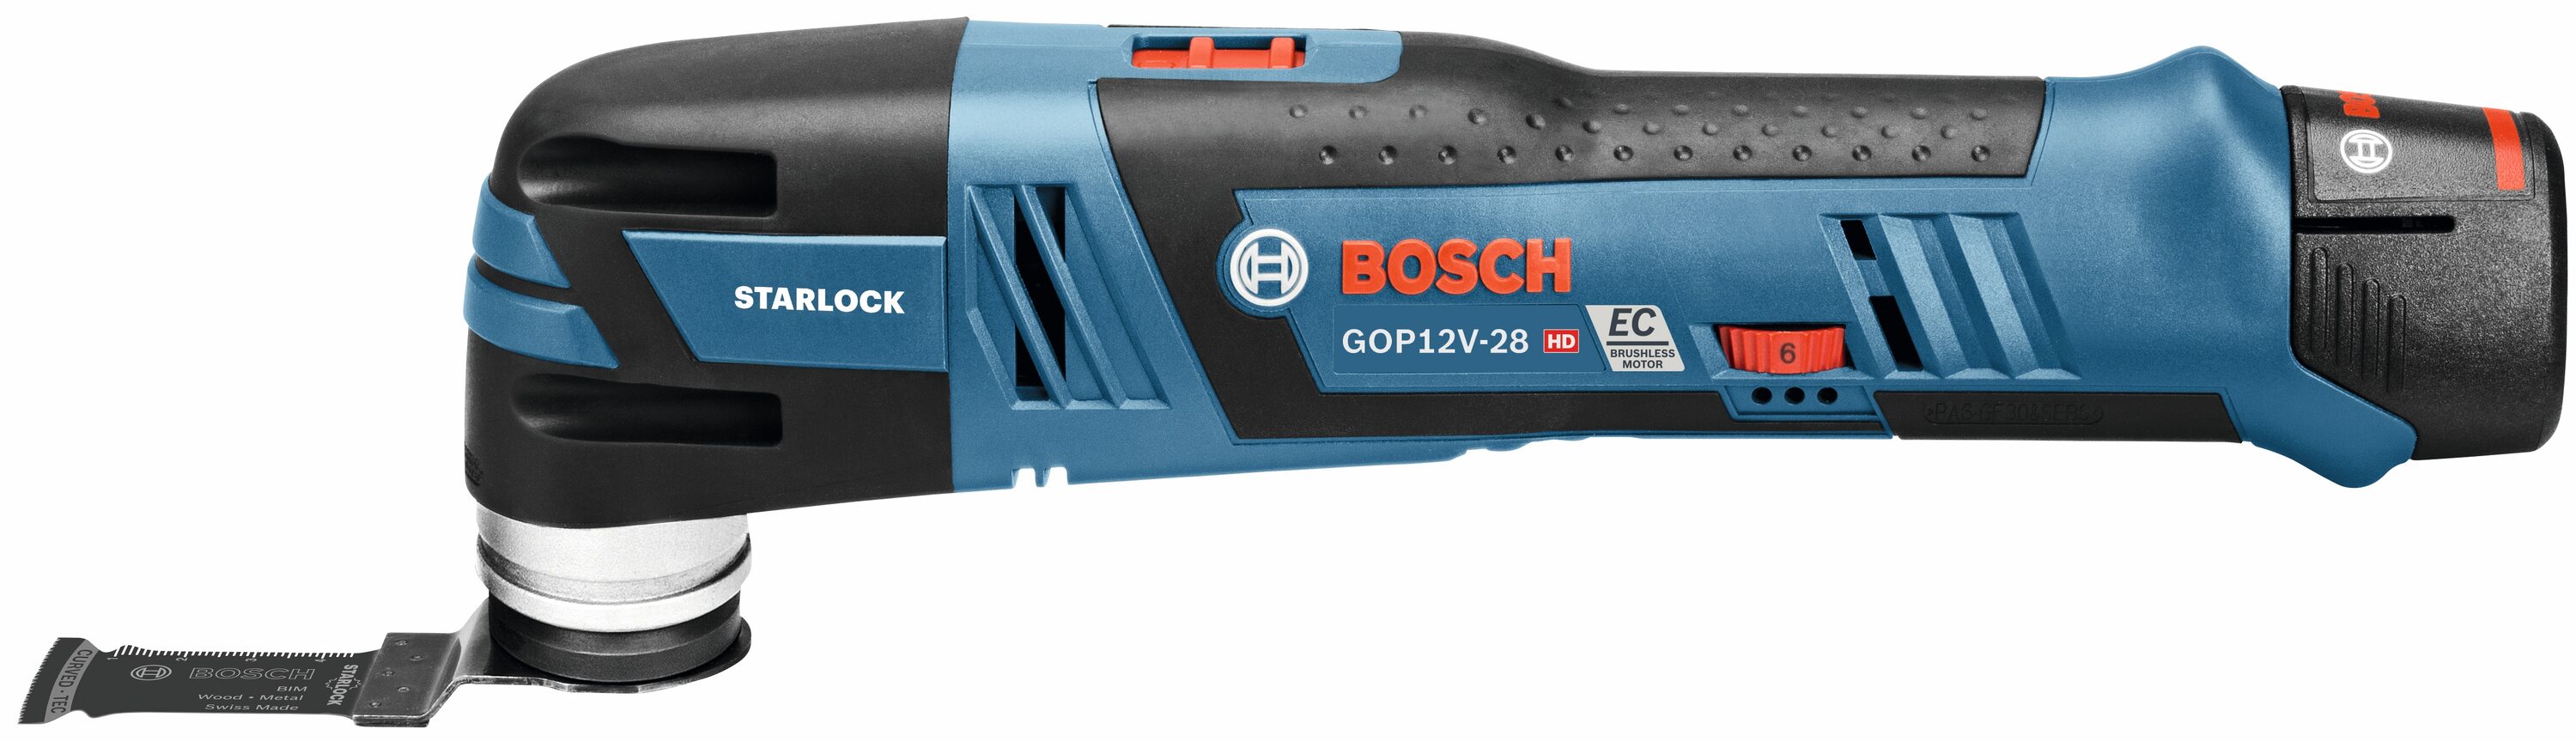  BOSCH GOP12V-28N 12V Max EC Brushless Starlock Oscillating  Multi-Tool Bare Tool : Tools & Home Improvement